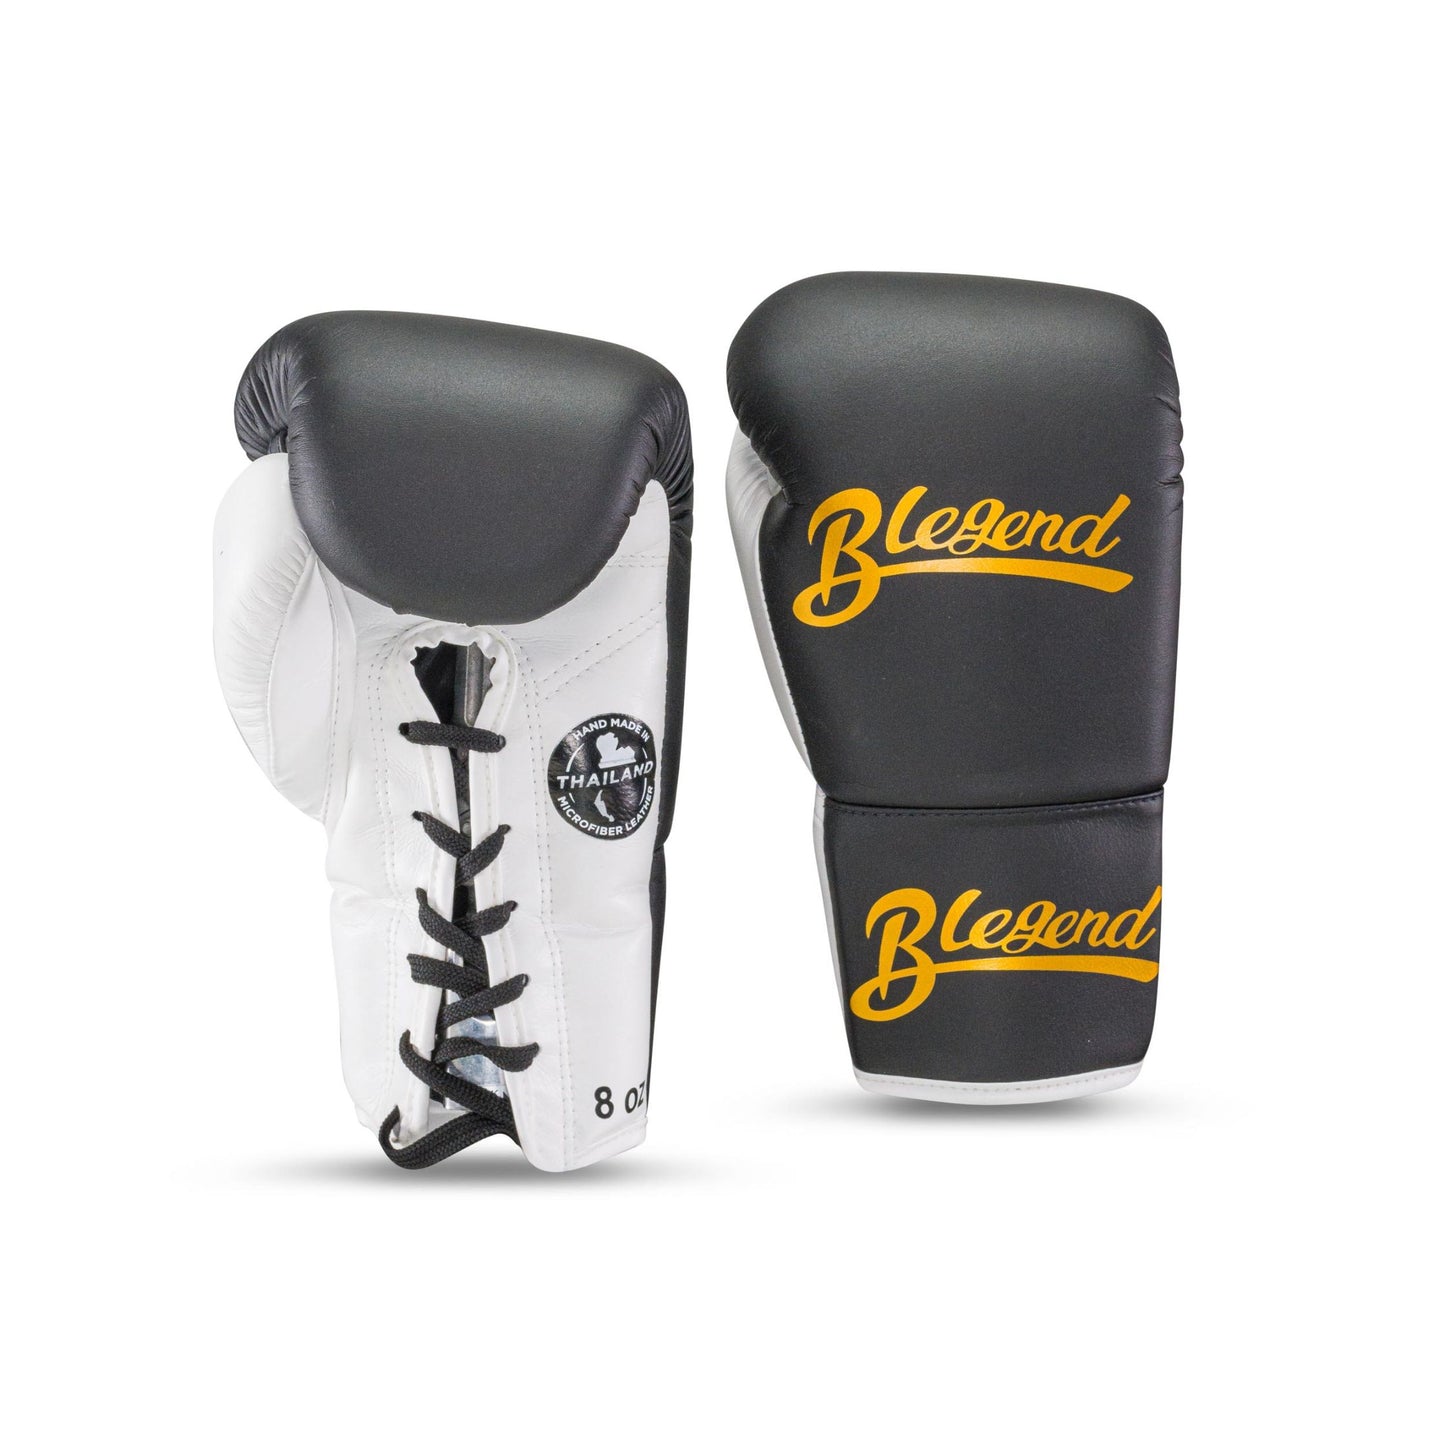 Blegend Boxing Gloves BGLLP Lace Up Black White